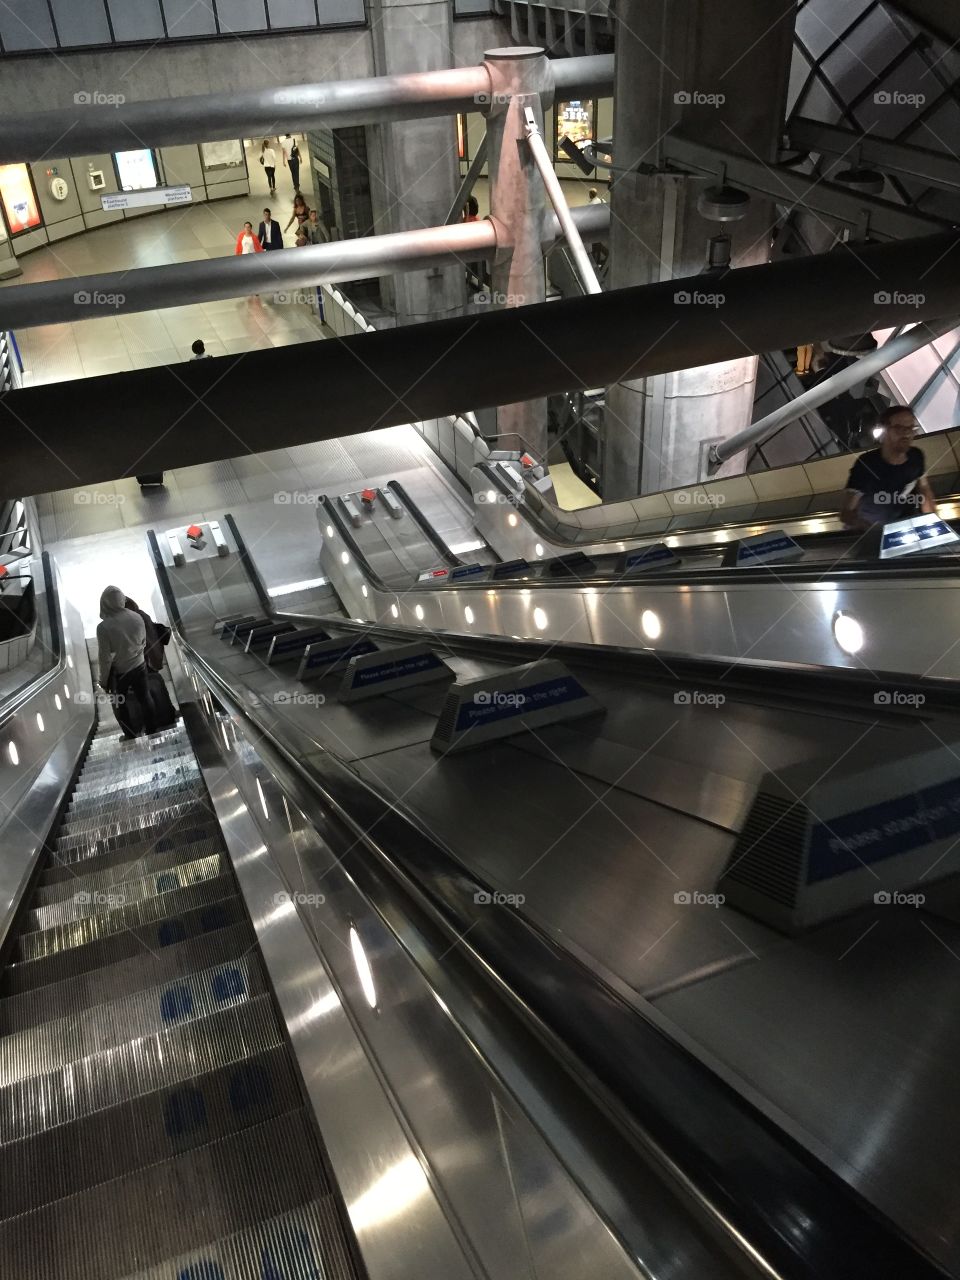 Taking the escalator down...